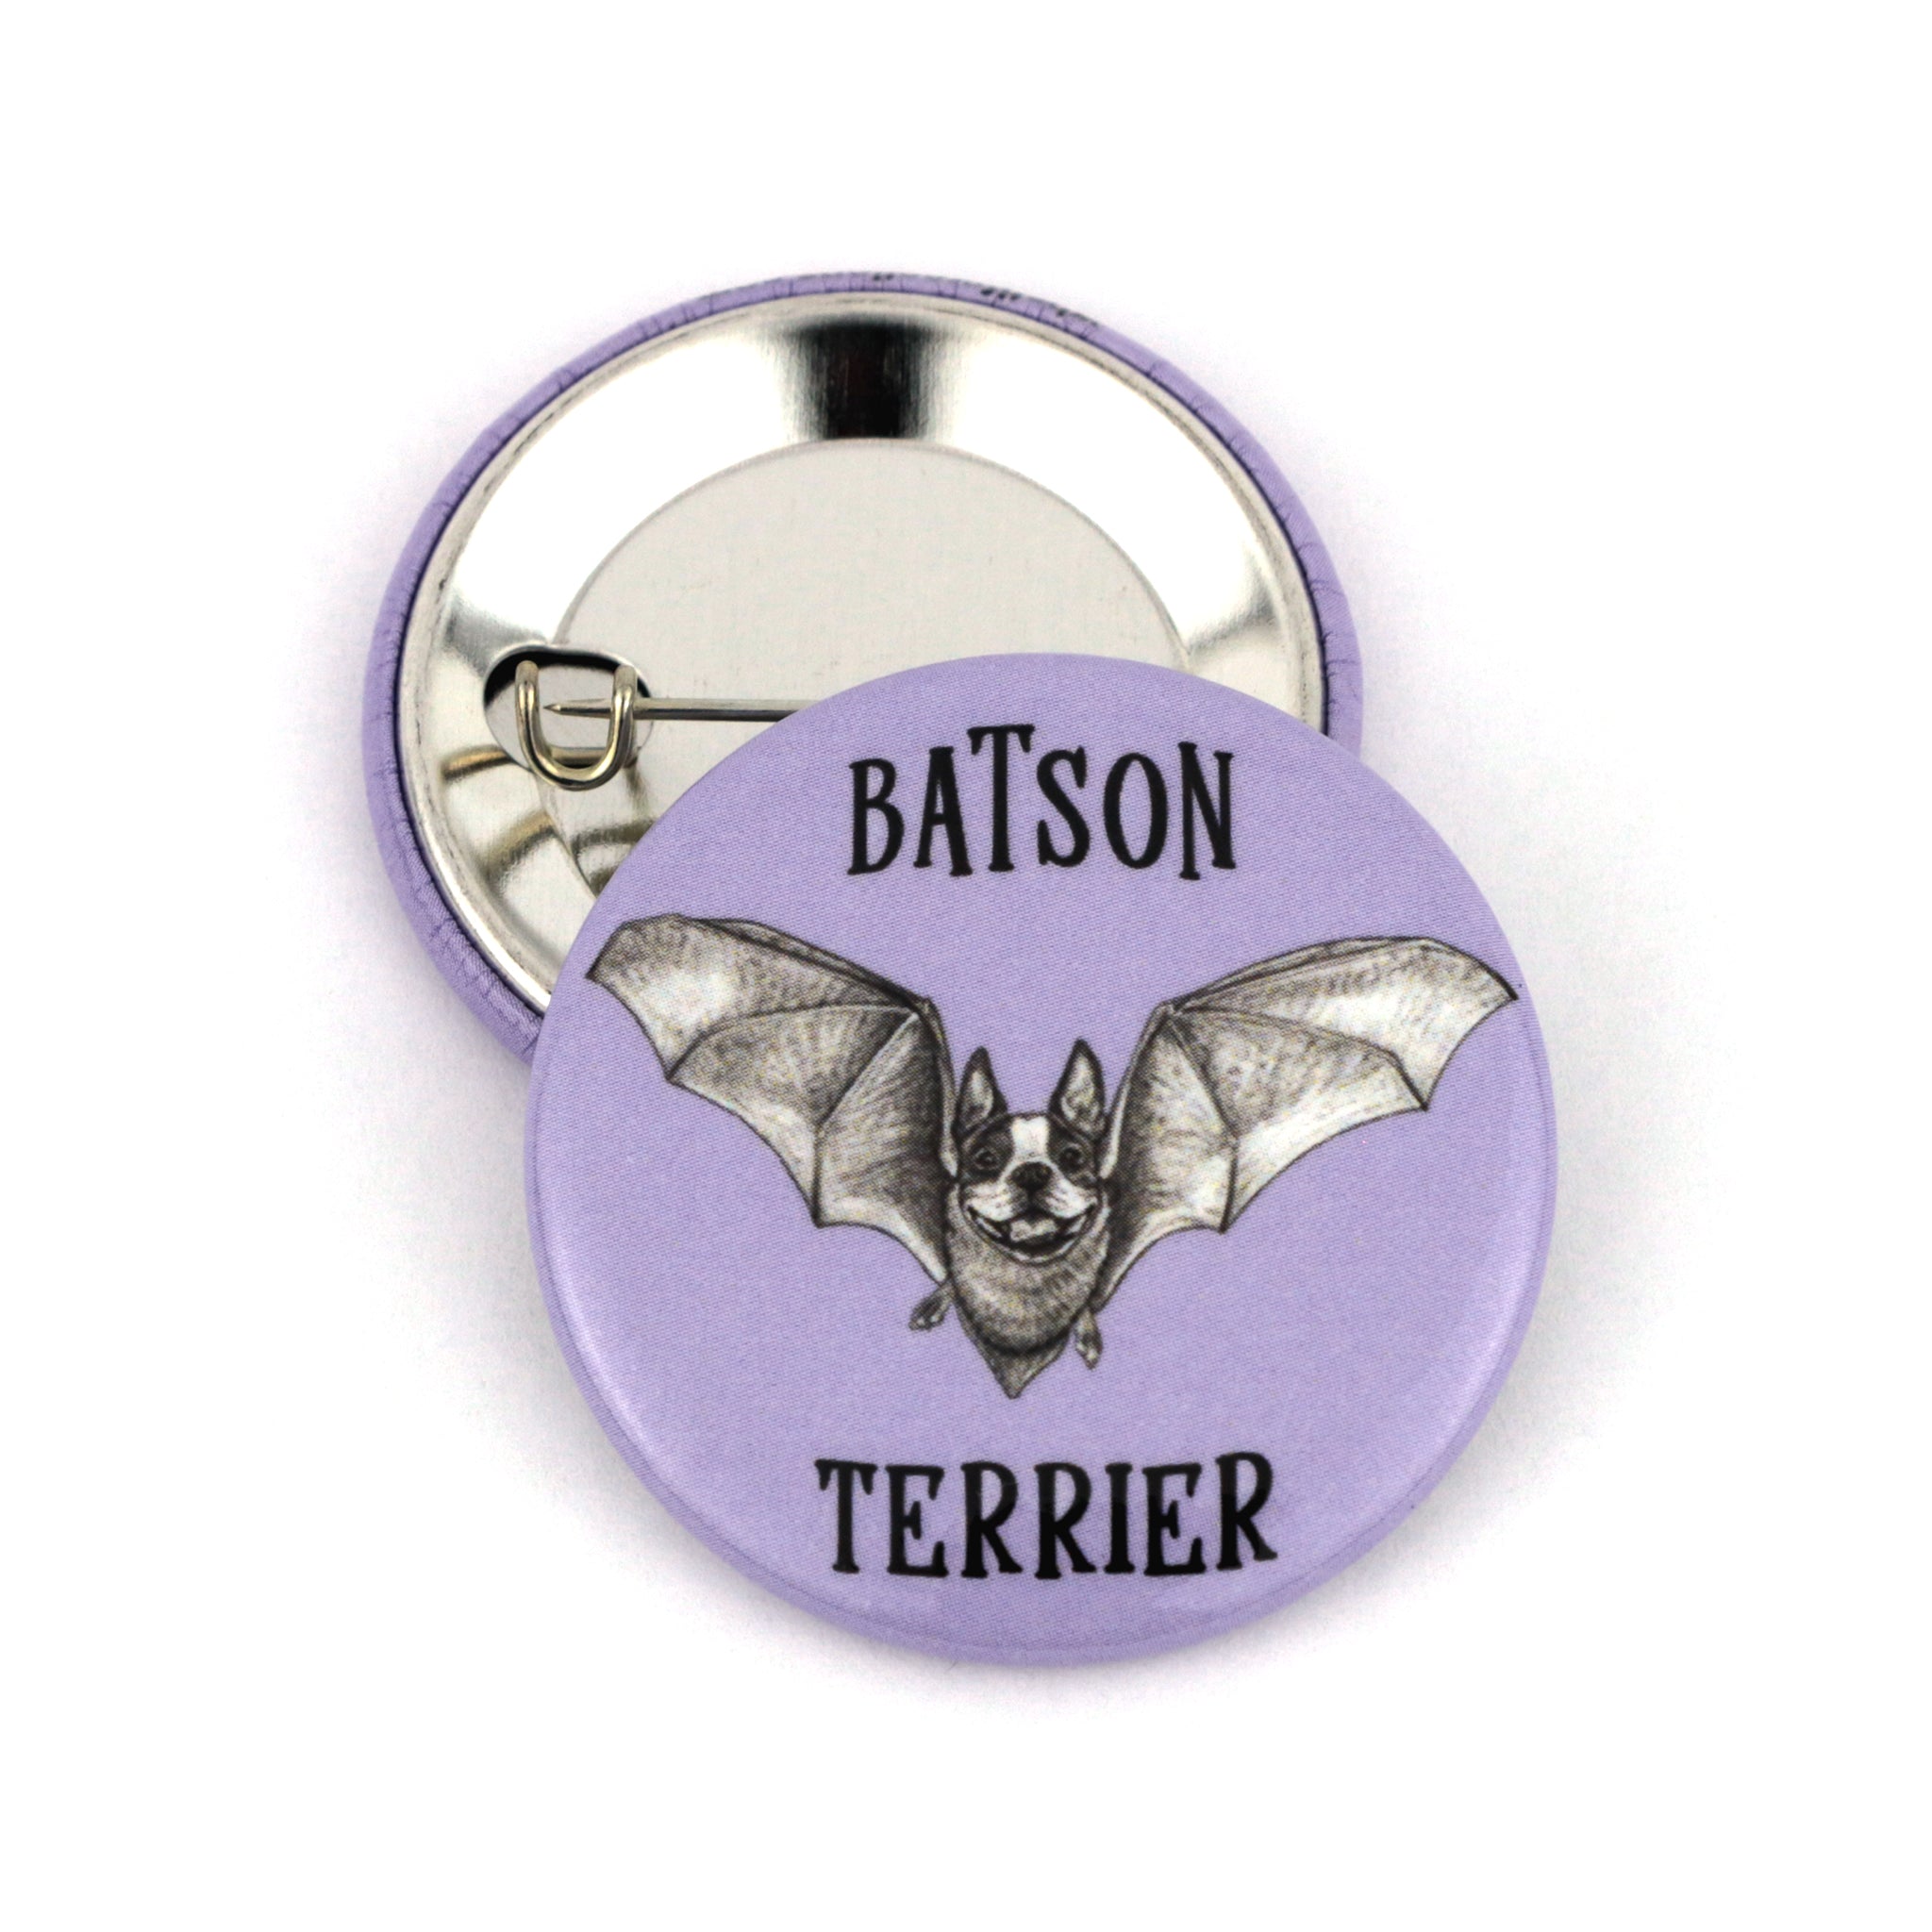 Batson Terrier | Boston Terrier + Bat Hybrid Animal | 1.5" Pinback Button